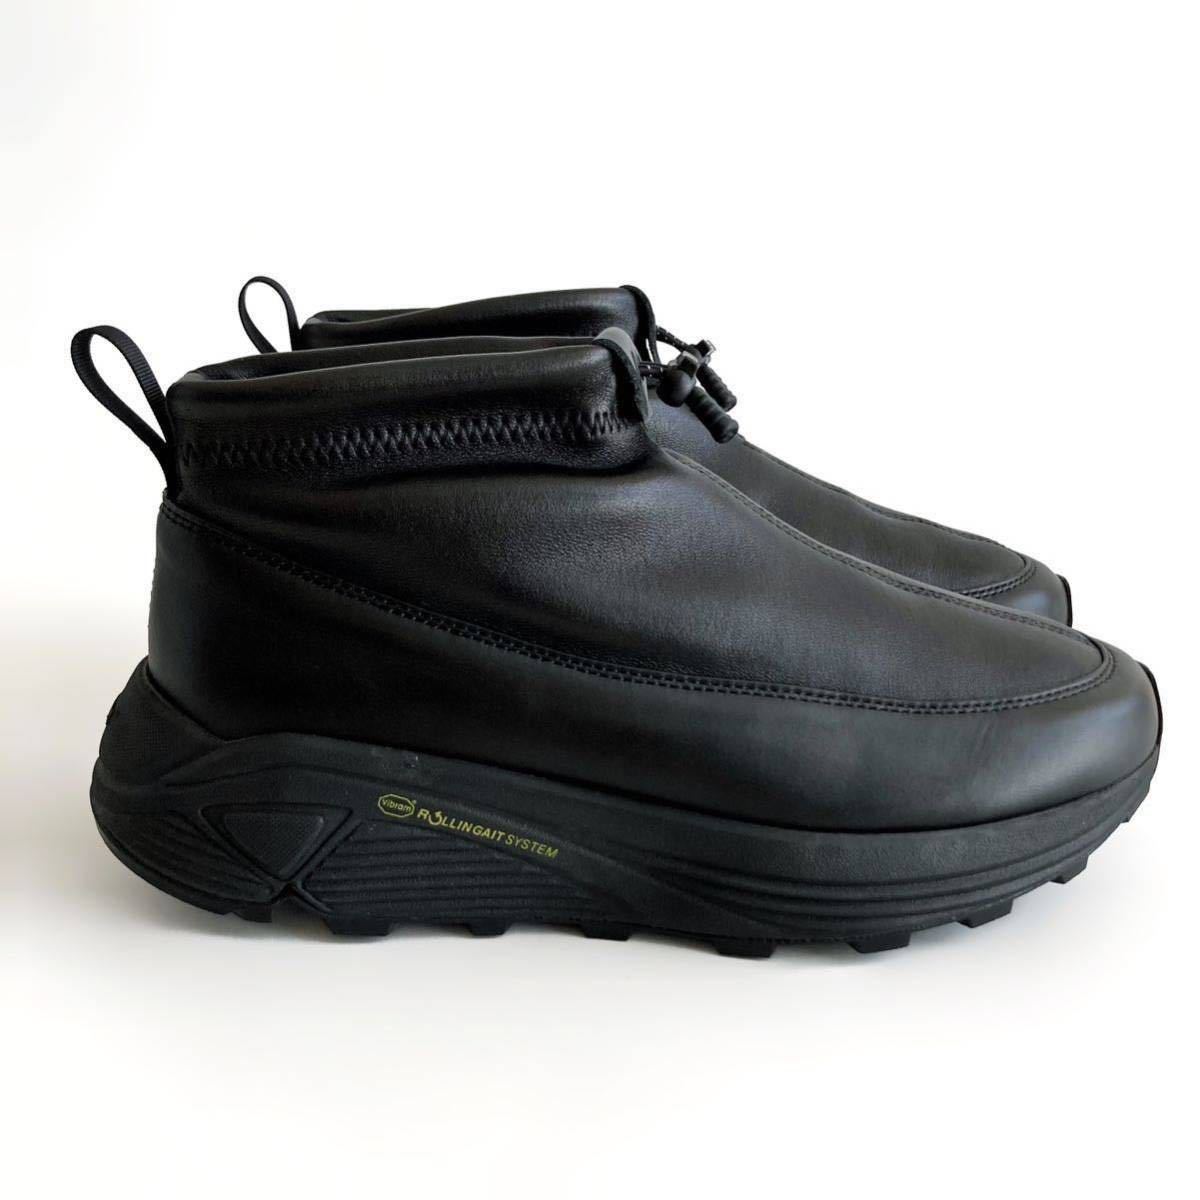  beautiful goods SnowPeak Leather Thermal Mock Shoes Snow Peak leather thermal mok shoes 9 27cm sneakers boots HI-TEC made in Japan 